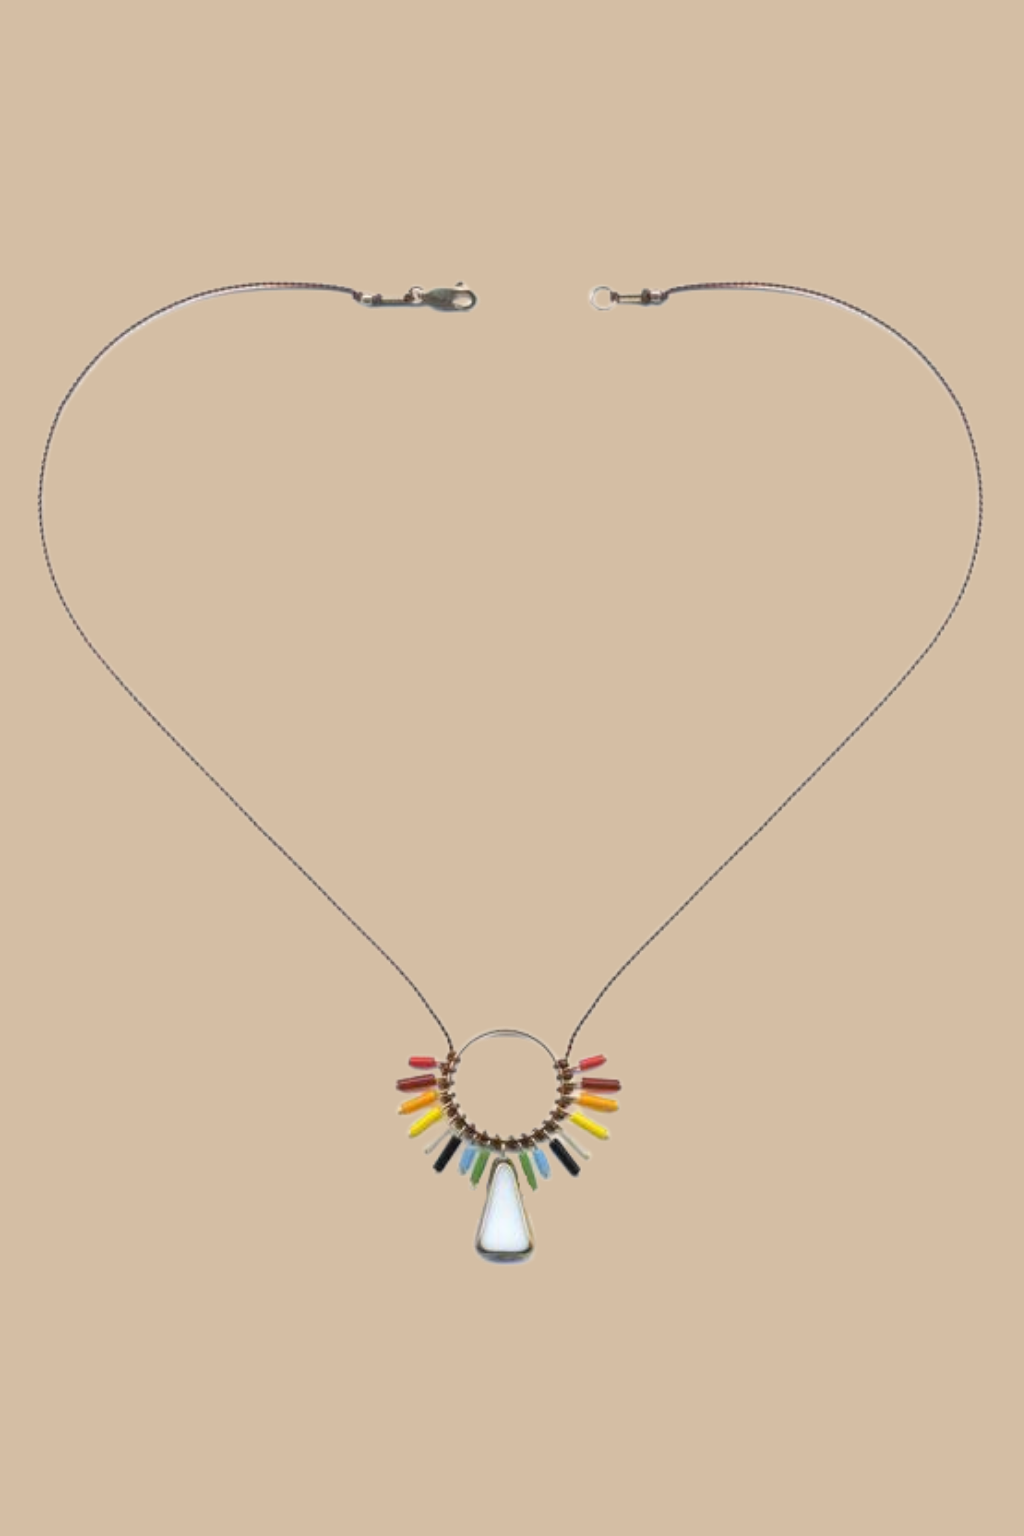 Hilma af Klimt Necklace with White Triangle